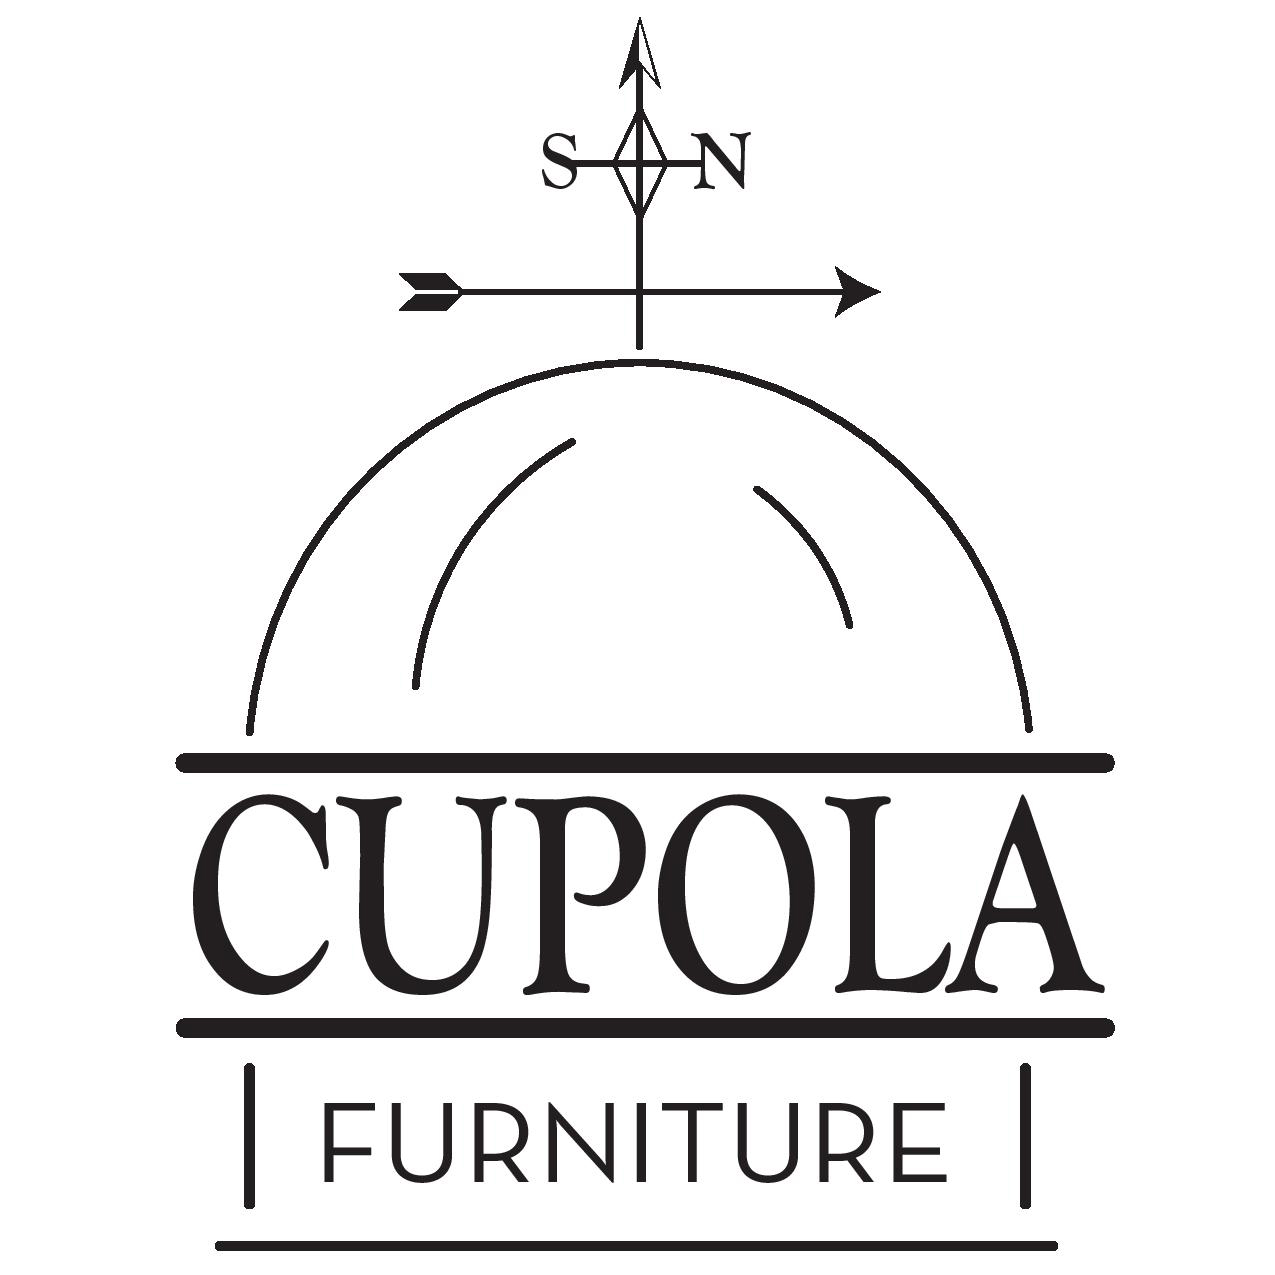 Cupola Furniture